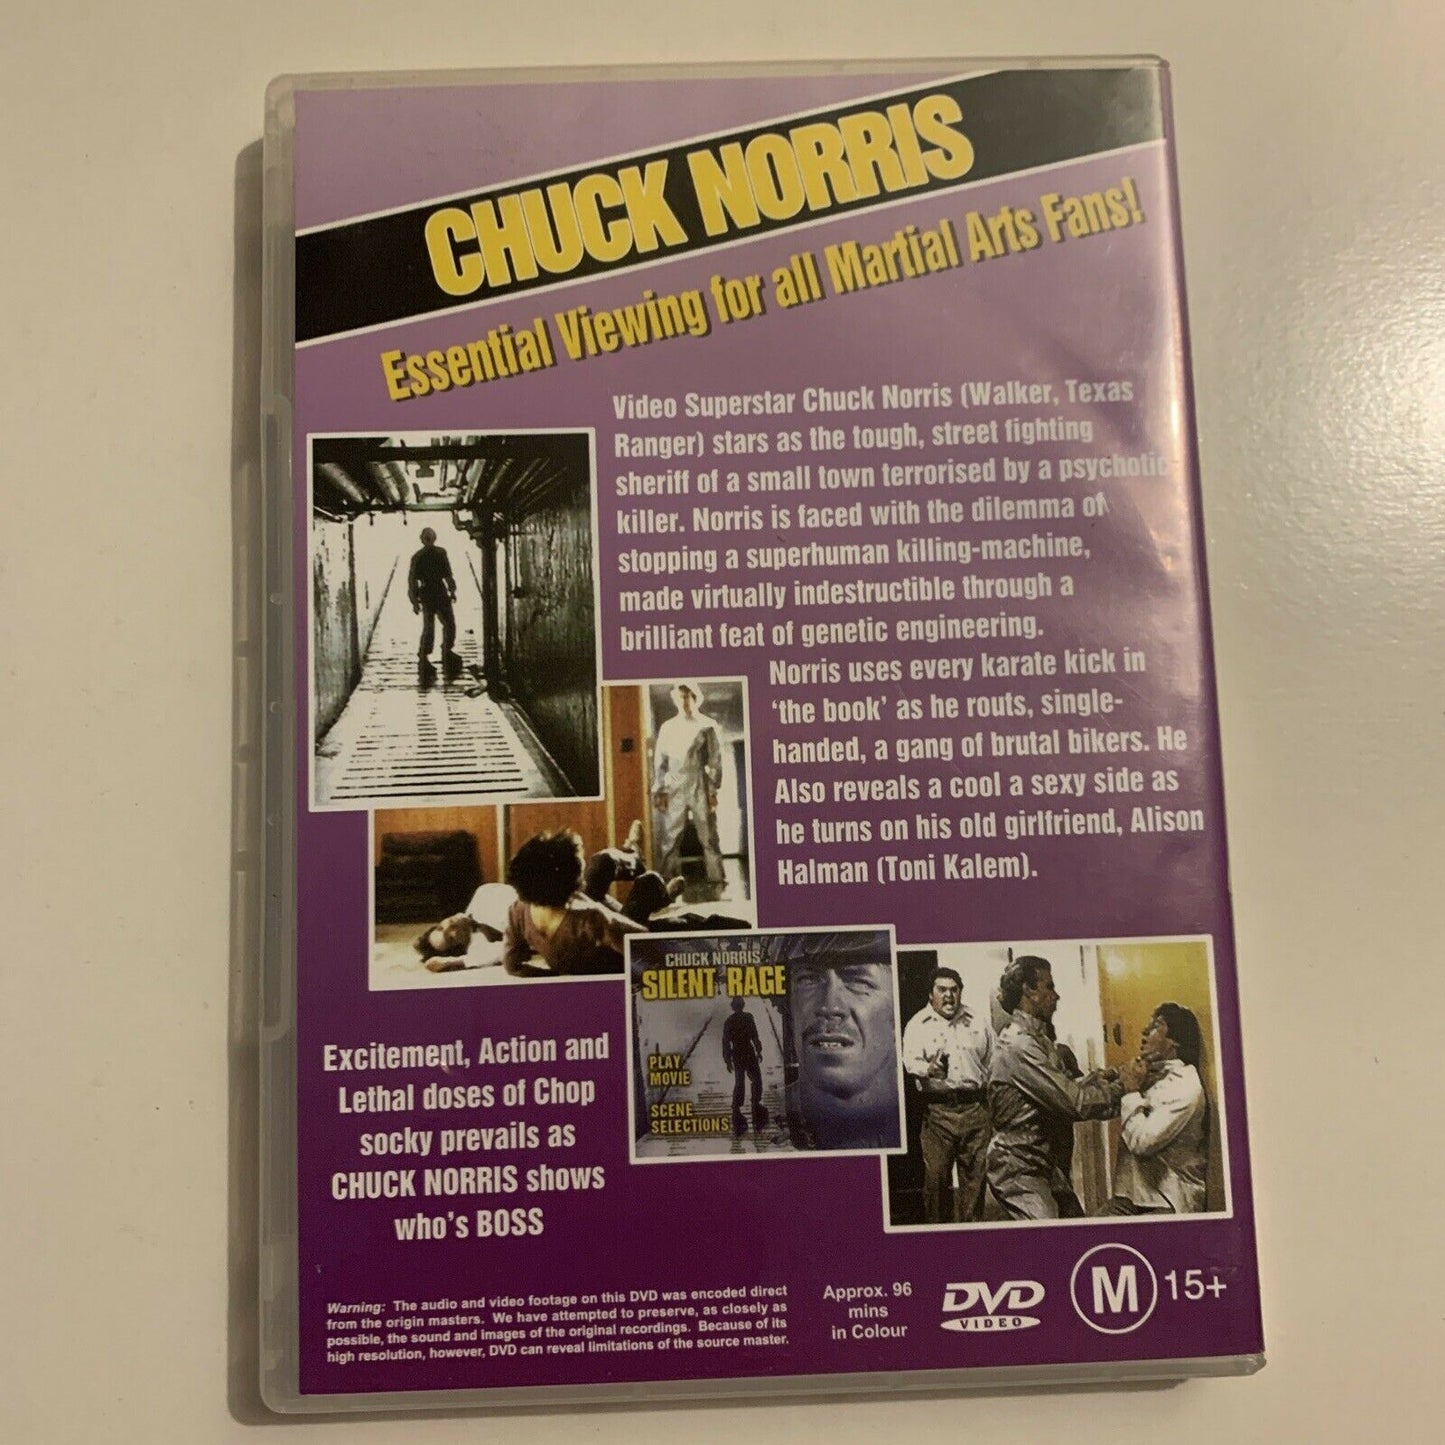 Chuck Norris: Silent Rage (DVD, 1982) All Regions